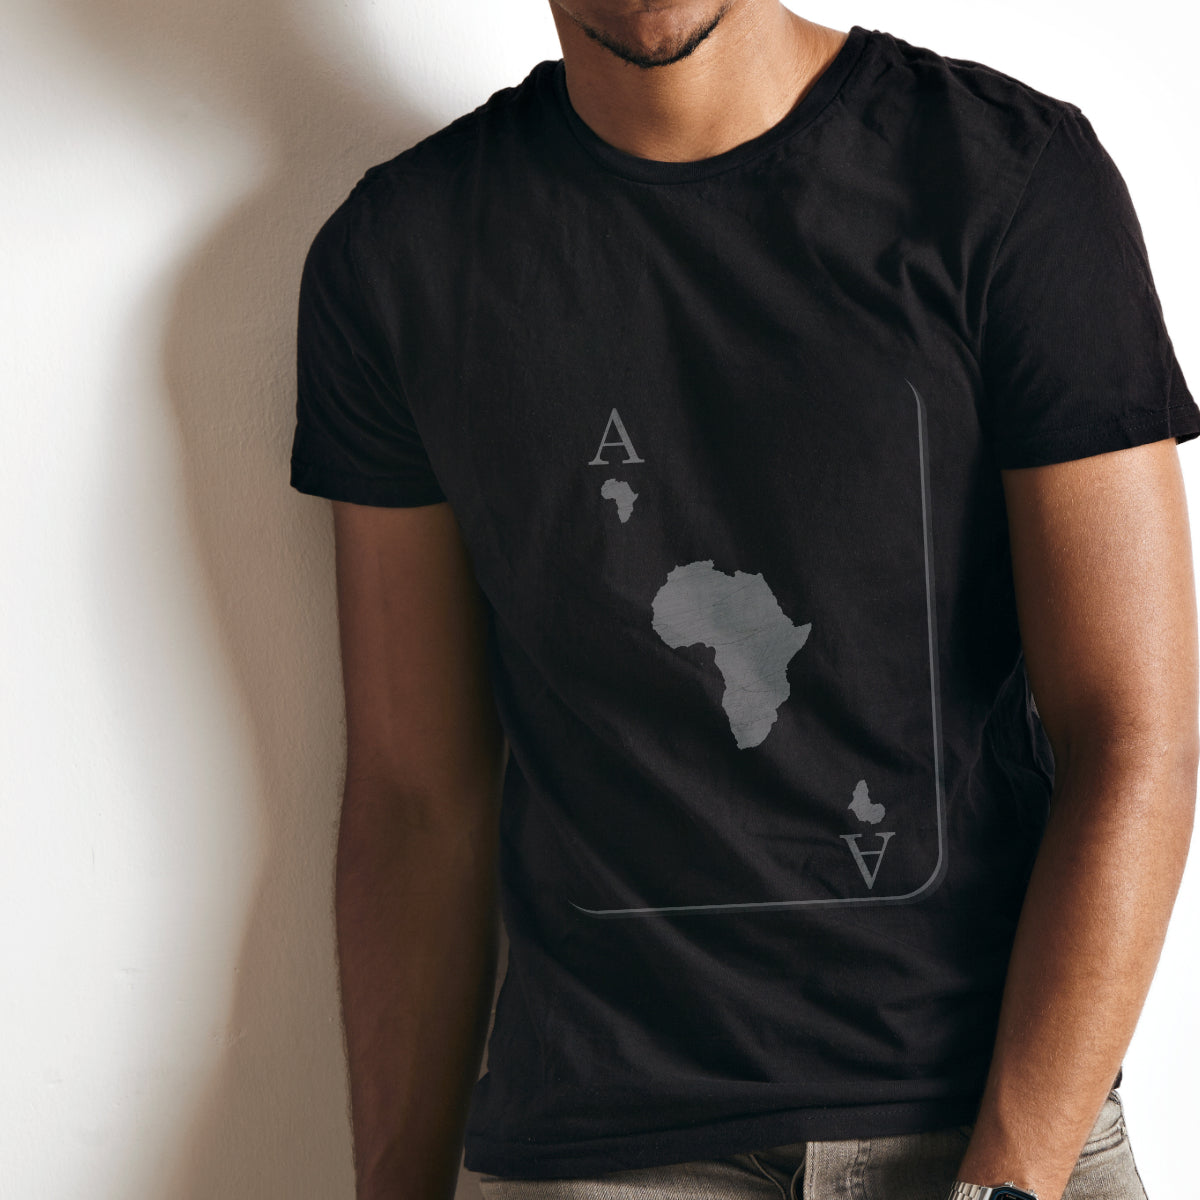 African Men's Shirts